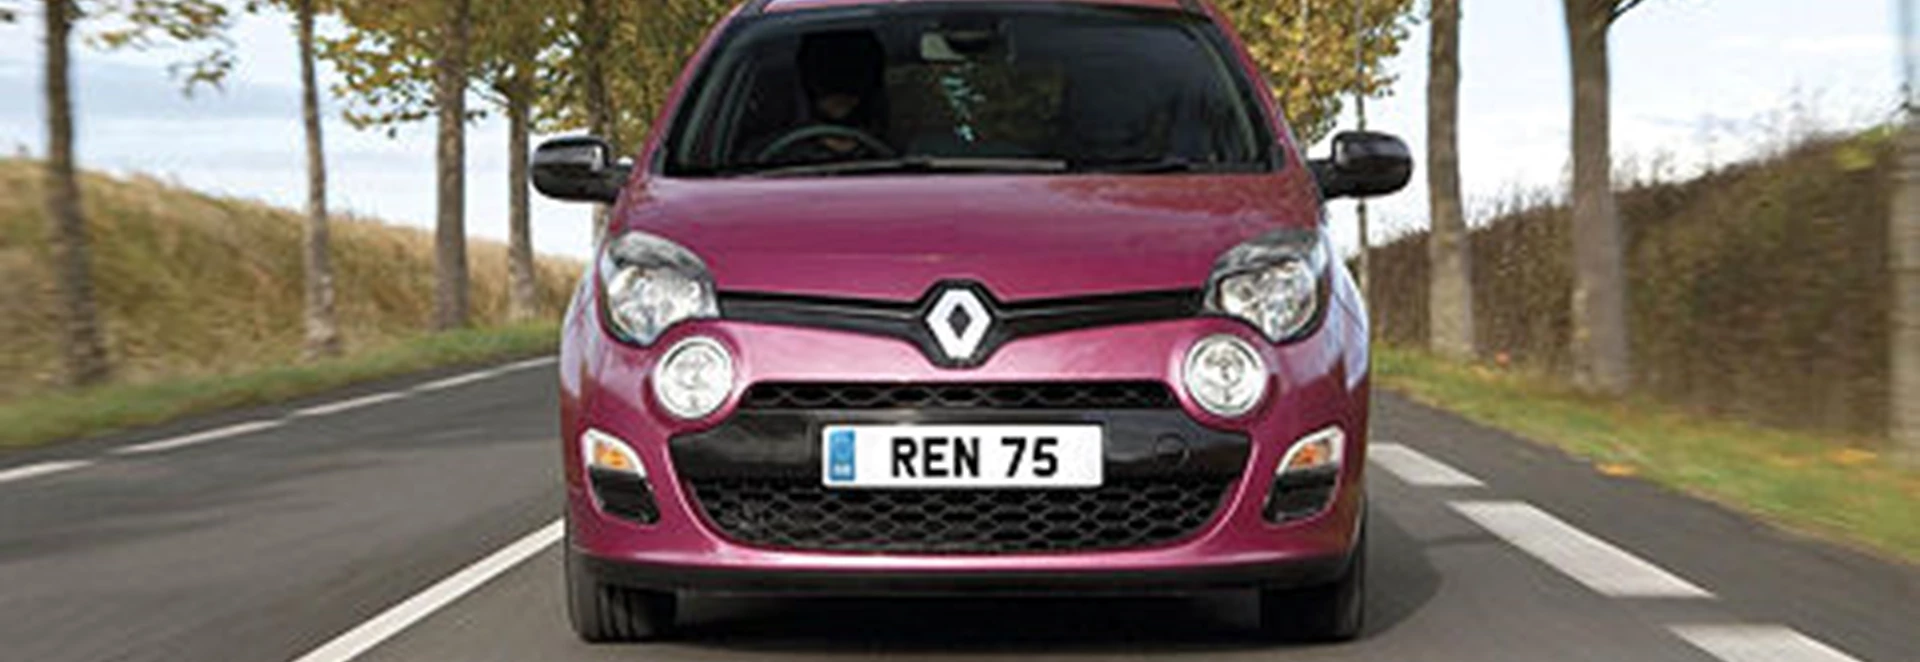 Renault Twingo 1.2 16v Dynamique 